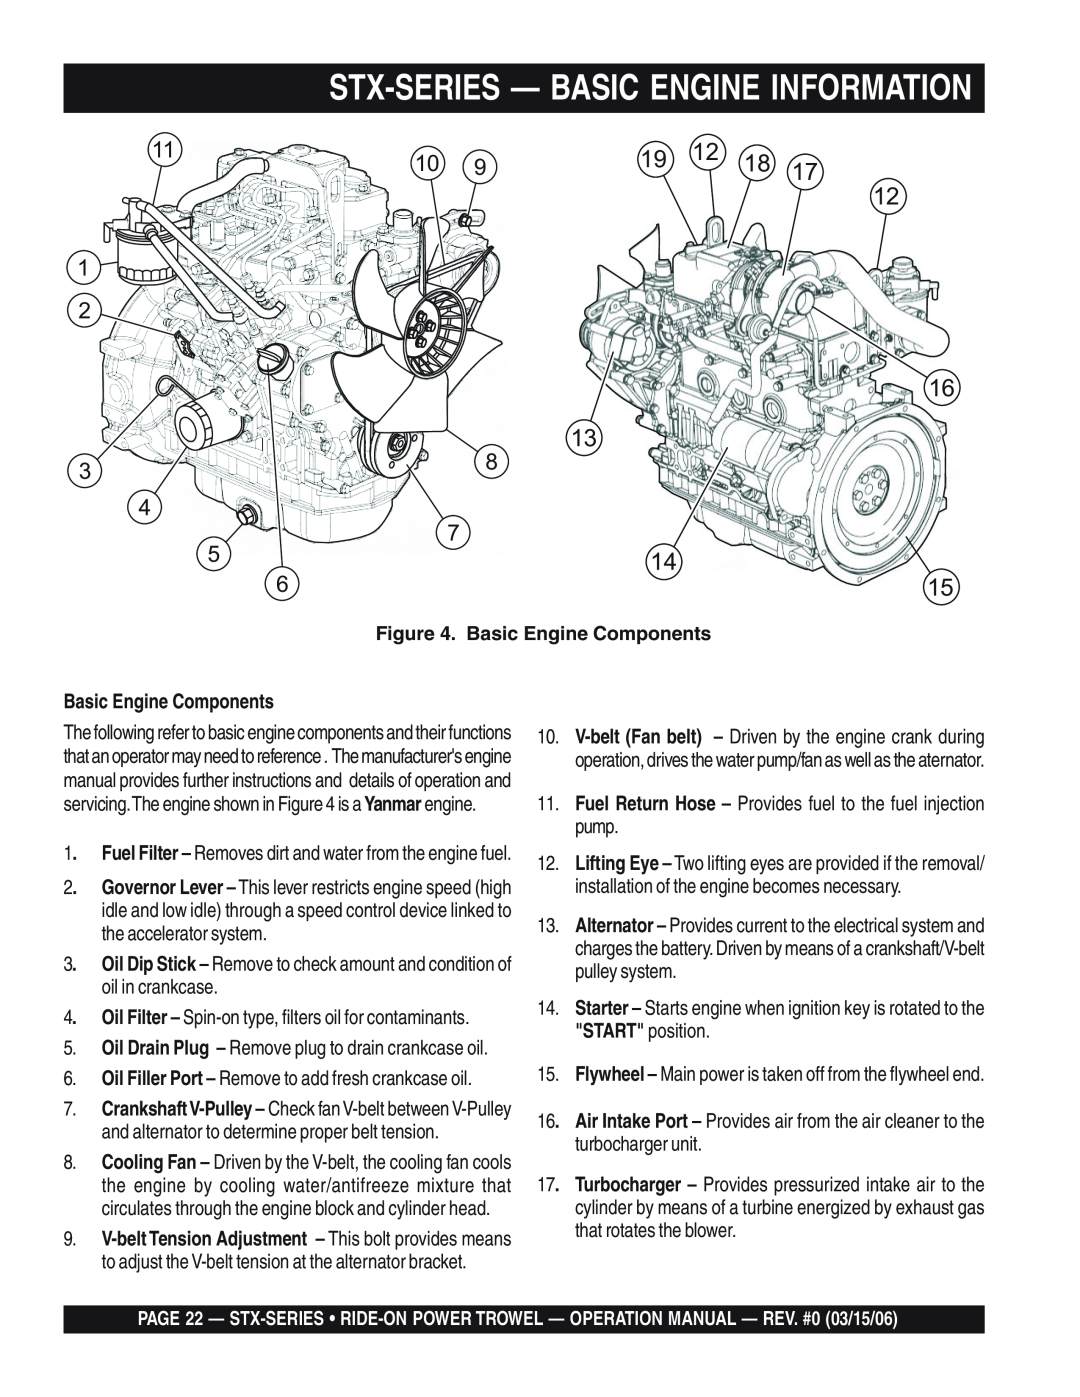 Multiquip STX55Y6 operation manual Stx-Series- Basic Engine Information, Basic Engine Components 